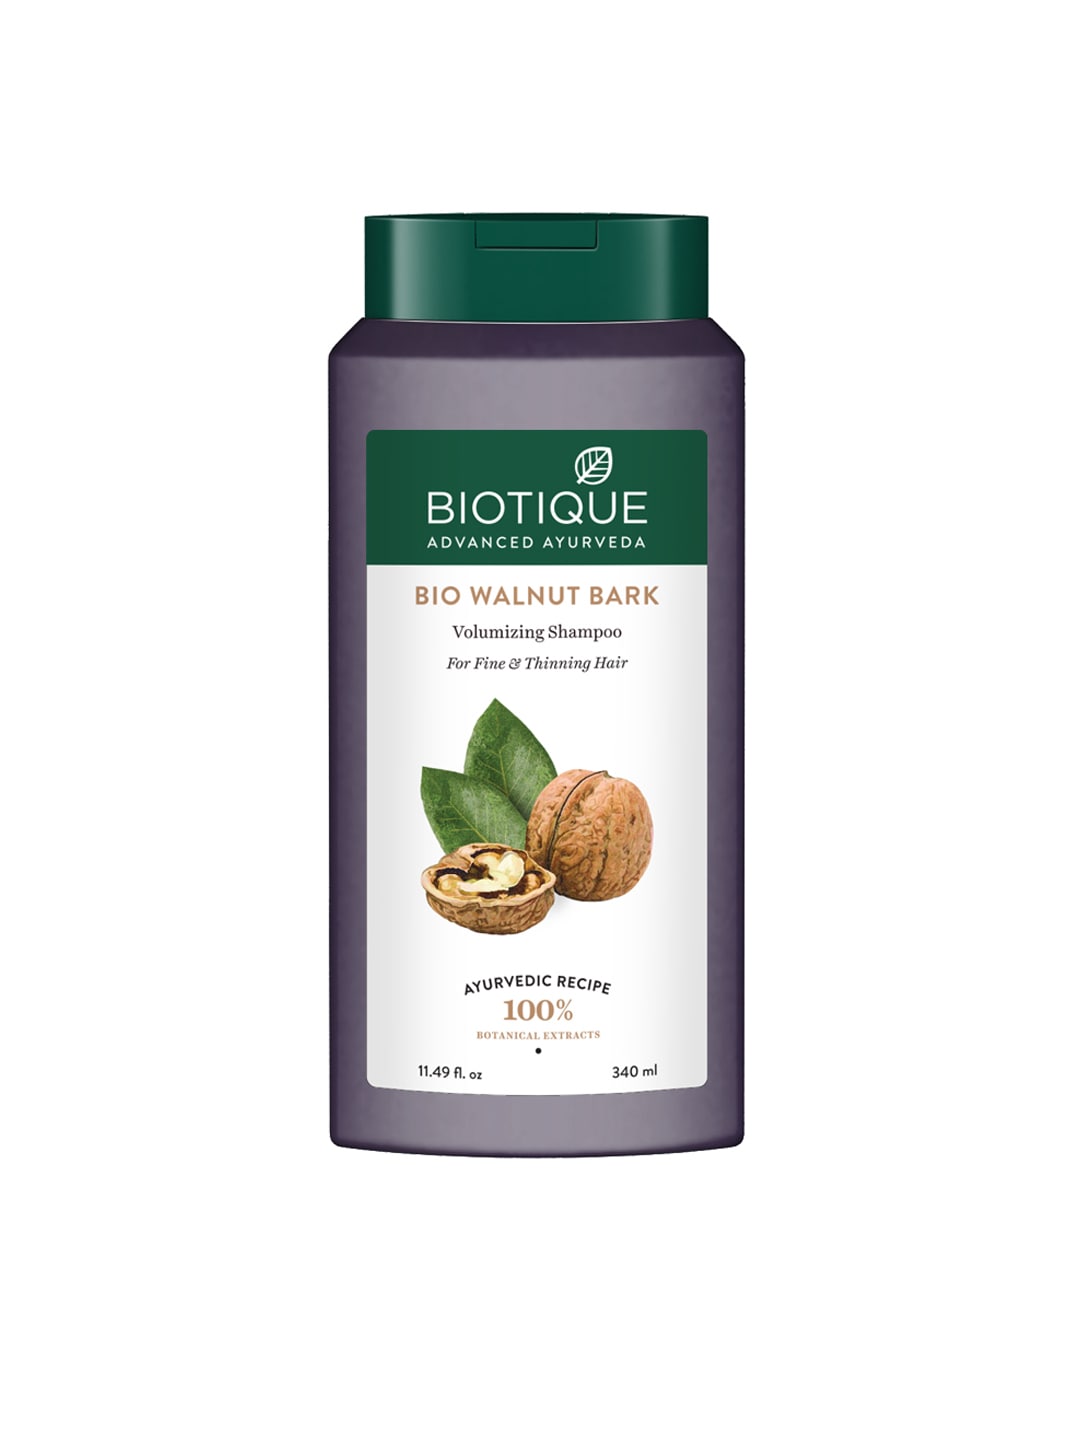 Biotique Bio Walnut Bark Volumizing Shampoo 340 ml Price in India